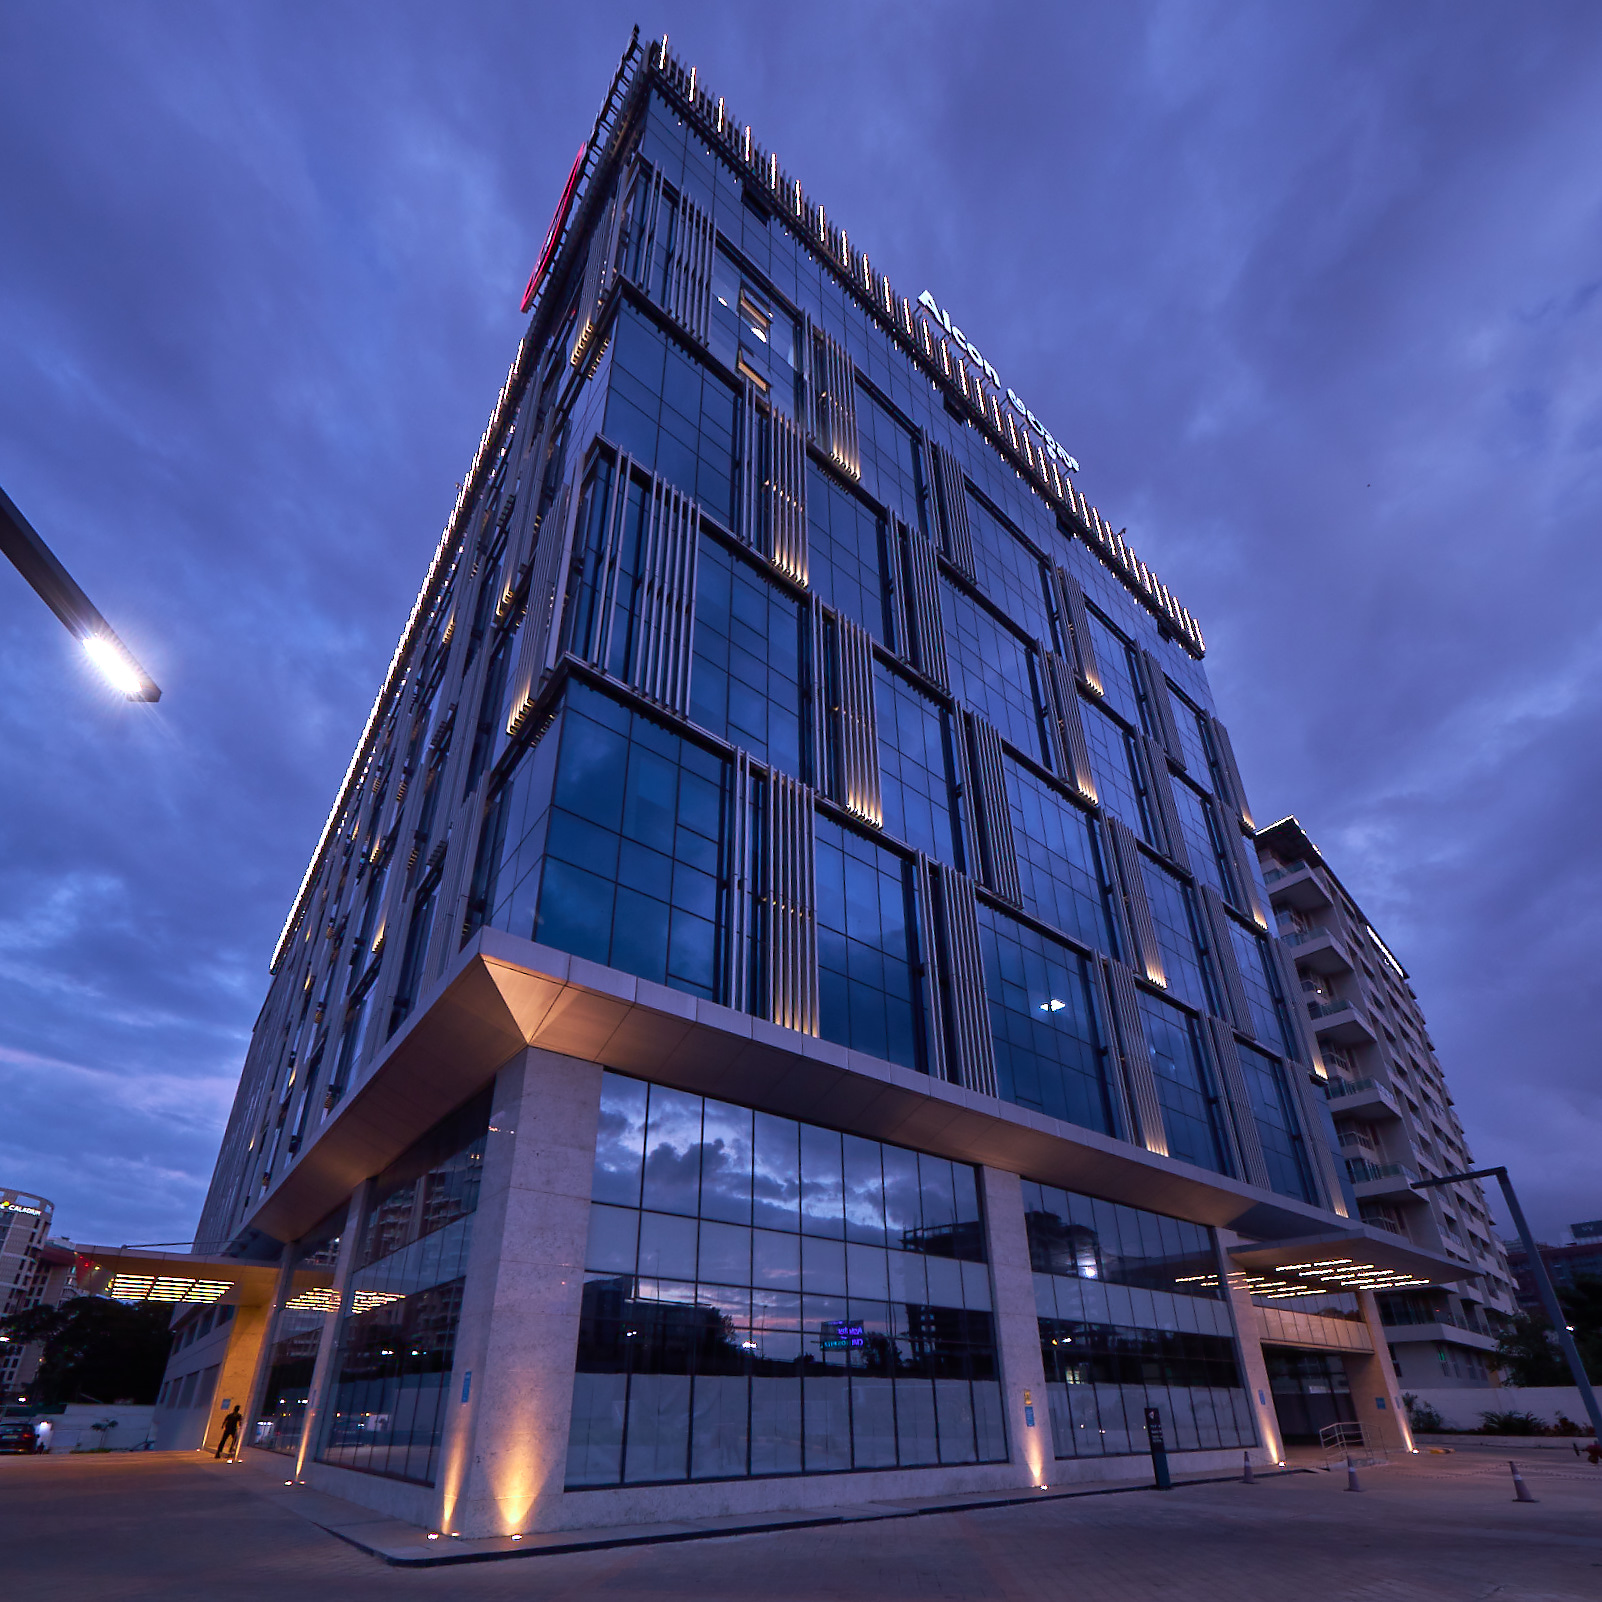 Azure office building at dusk